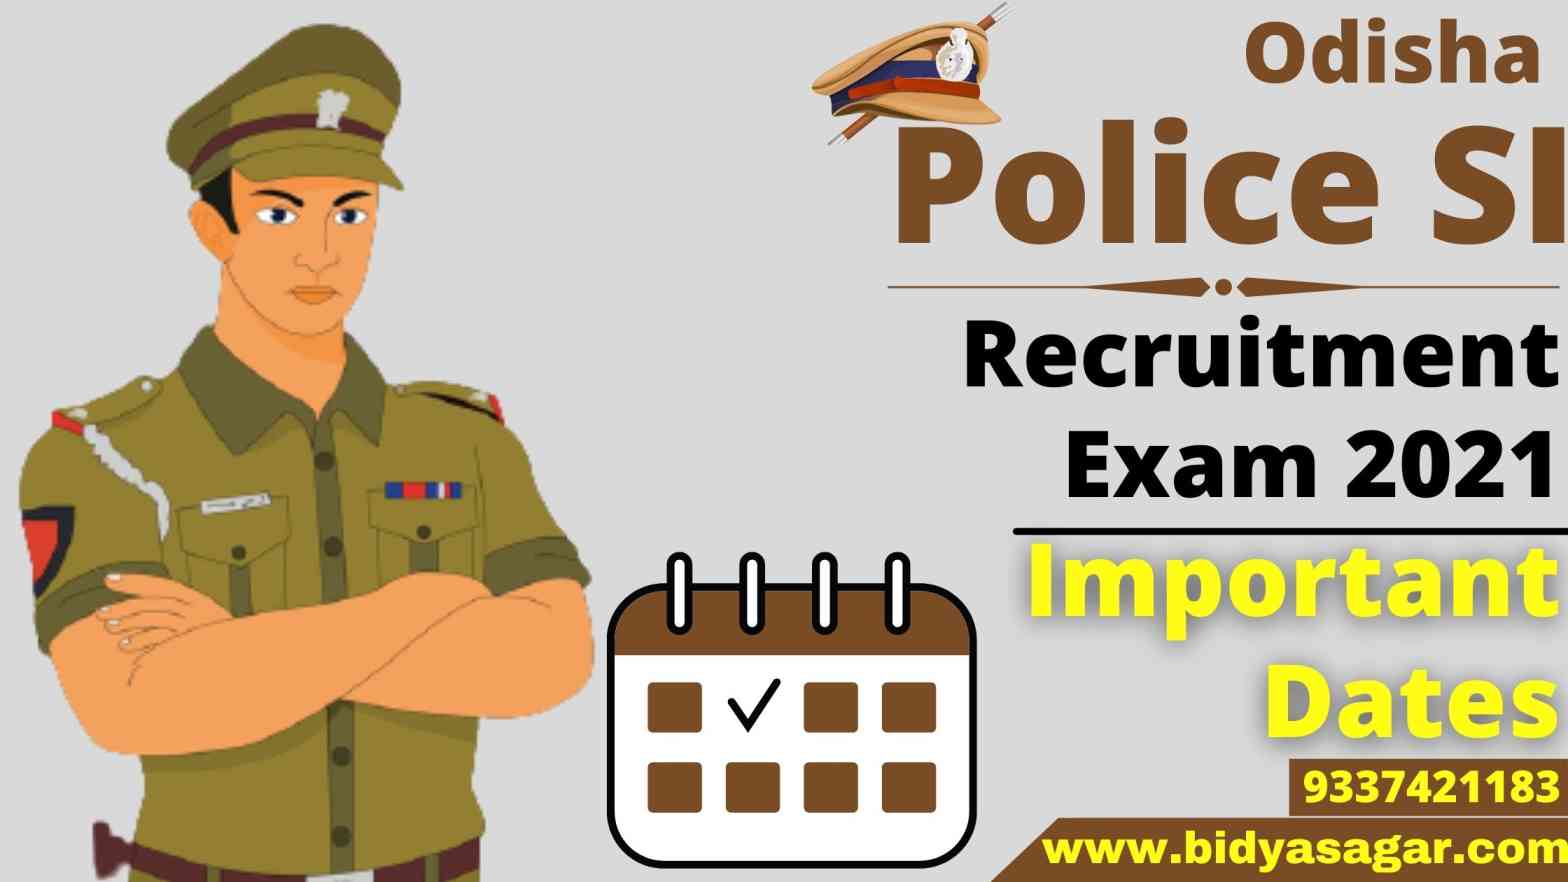 Odisha Police SI Recruitment Exam 2021 Important Dates